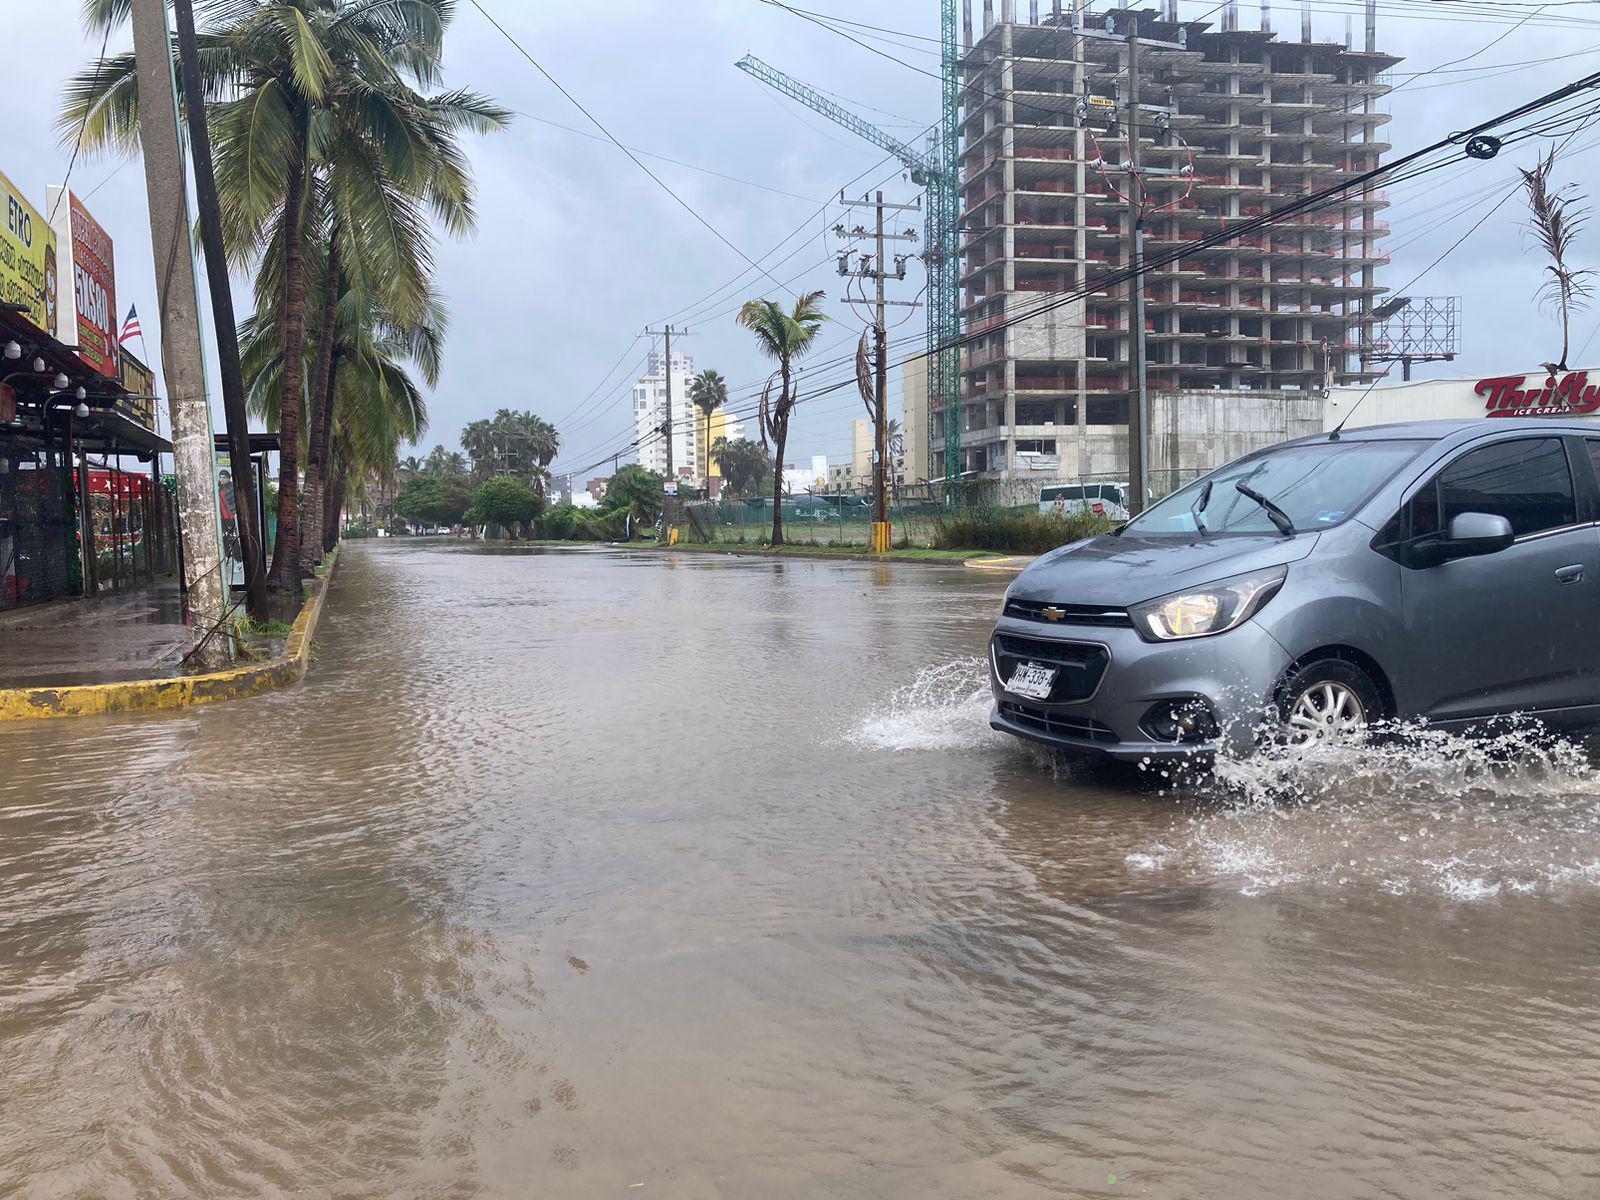 $!Lluvias de este lunes provocan avenidas inundadas en diversas zonas de Mazatlán